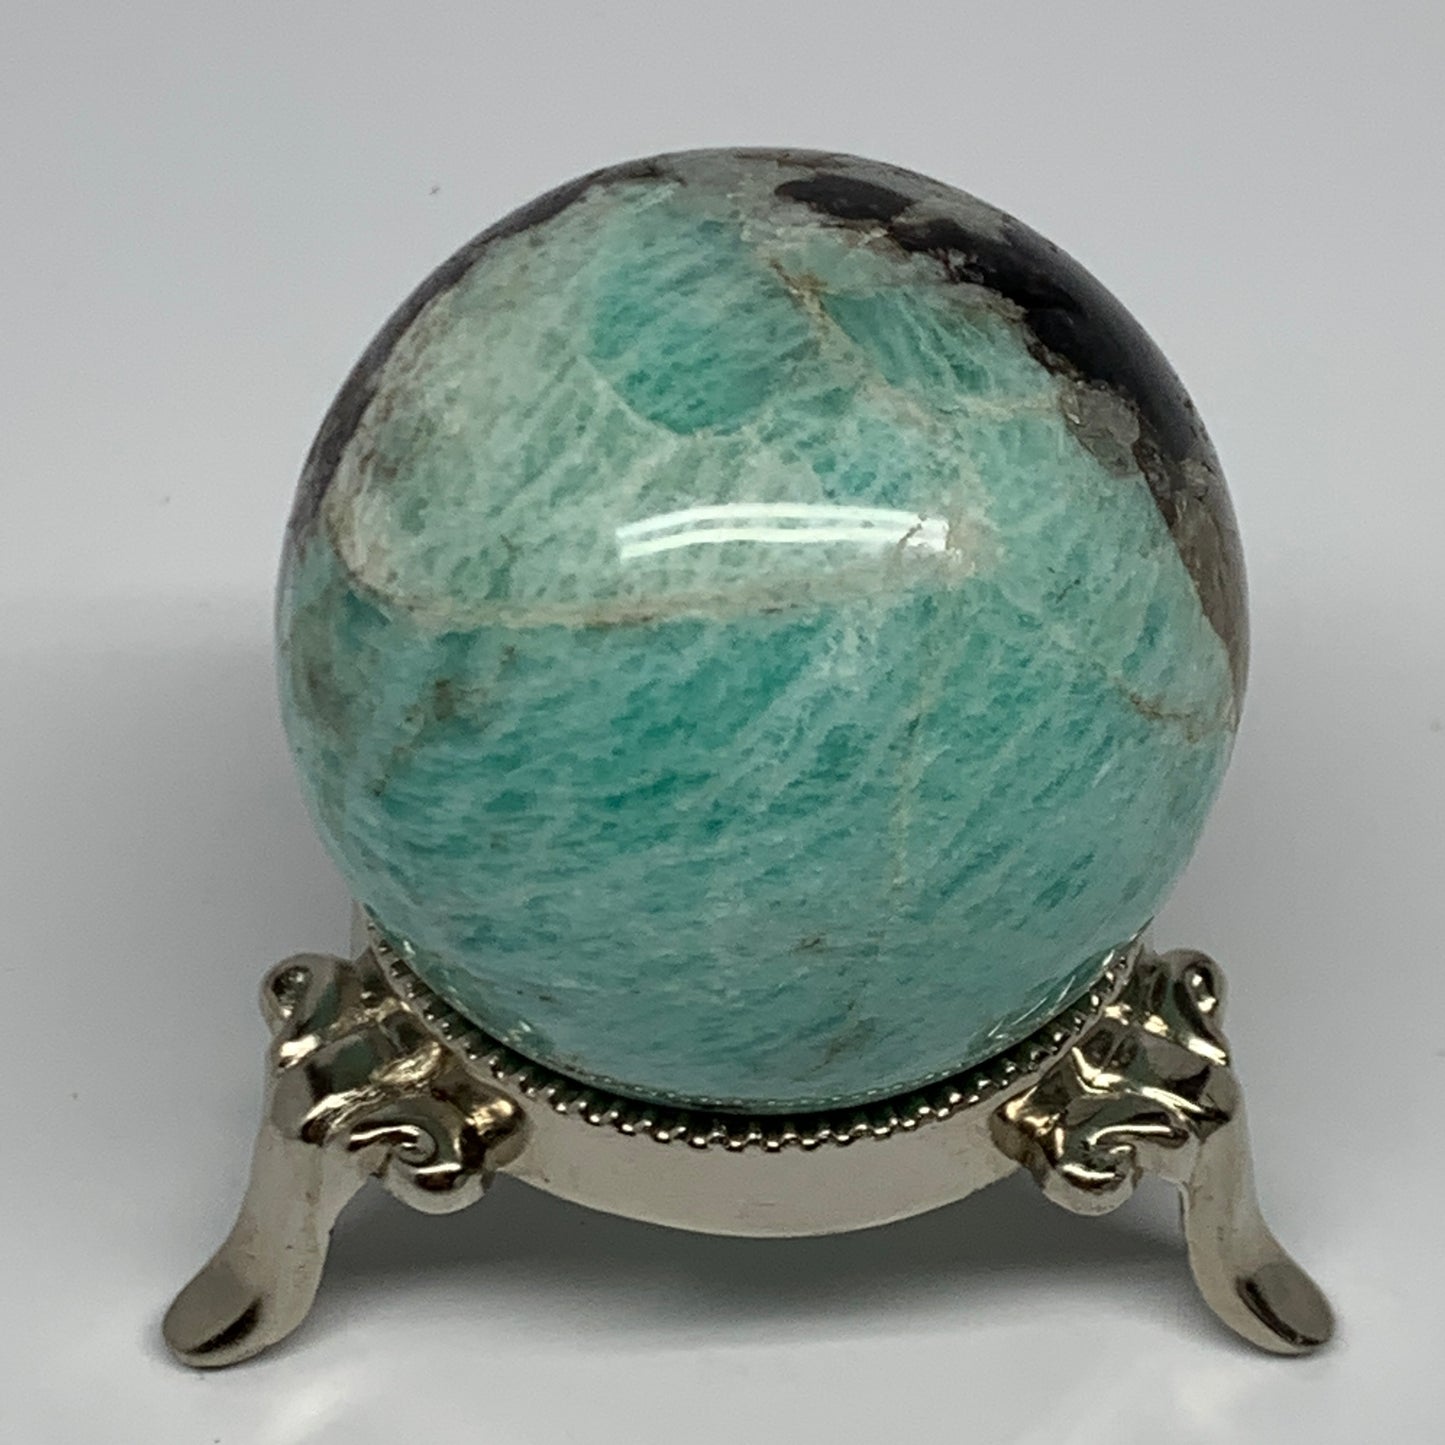 183.8g, 2" Amazonite Smoky Quartz Sphere Ball Gemstone from Madagascar,B15856